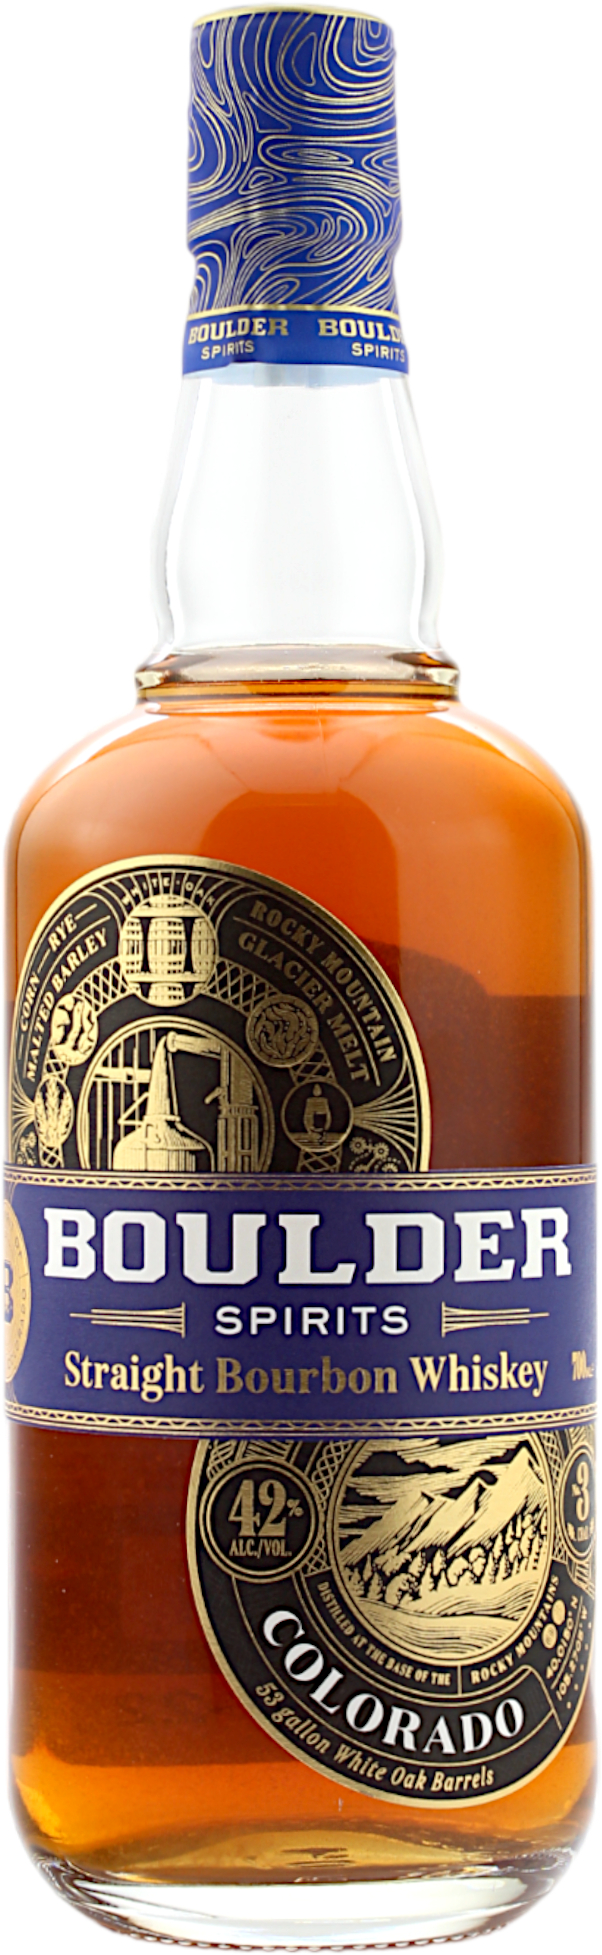 Boulder Bourbon Whiskey Straight